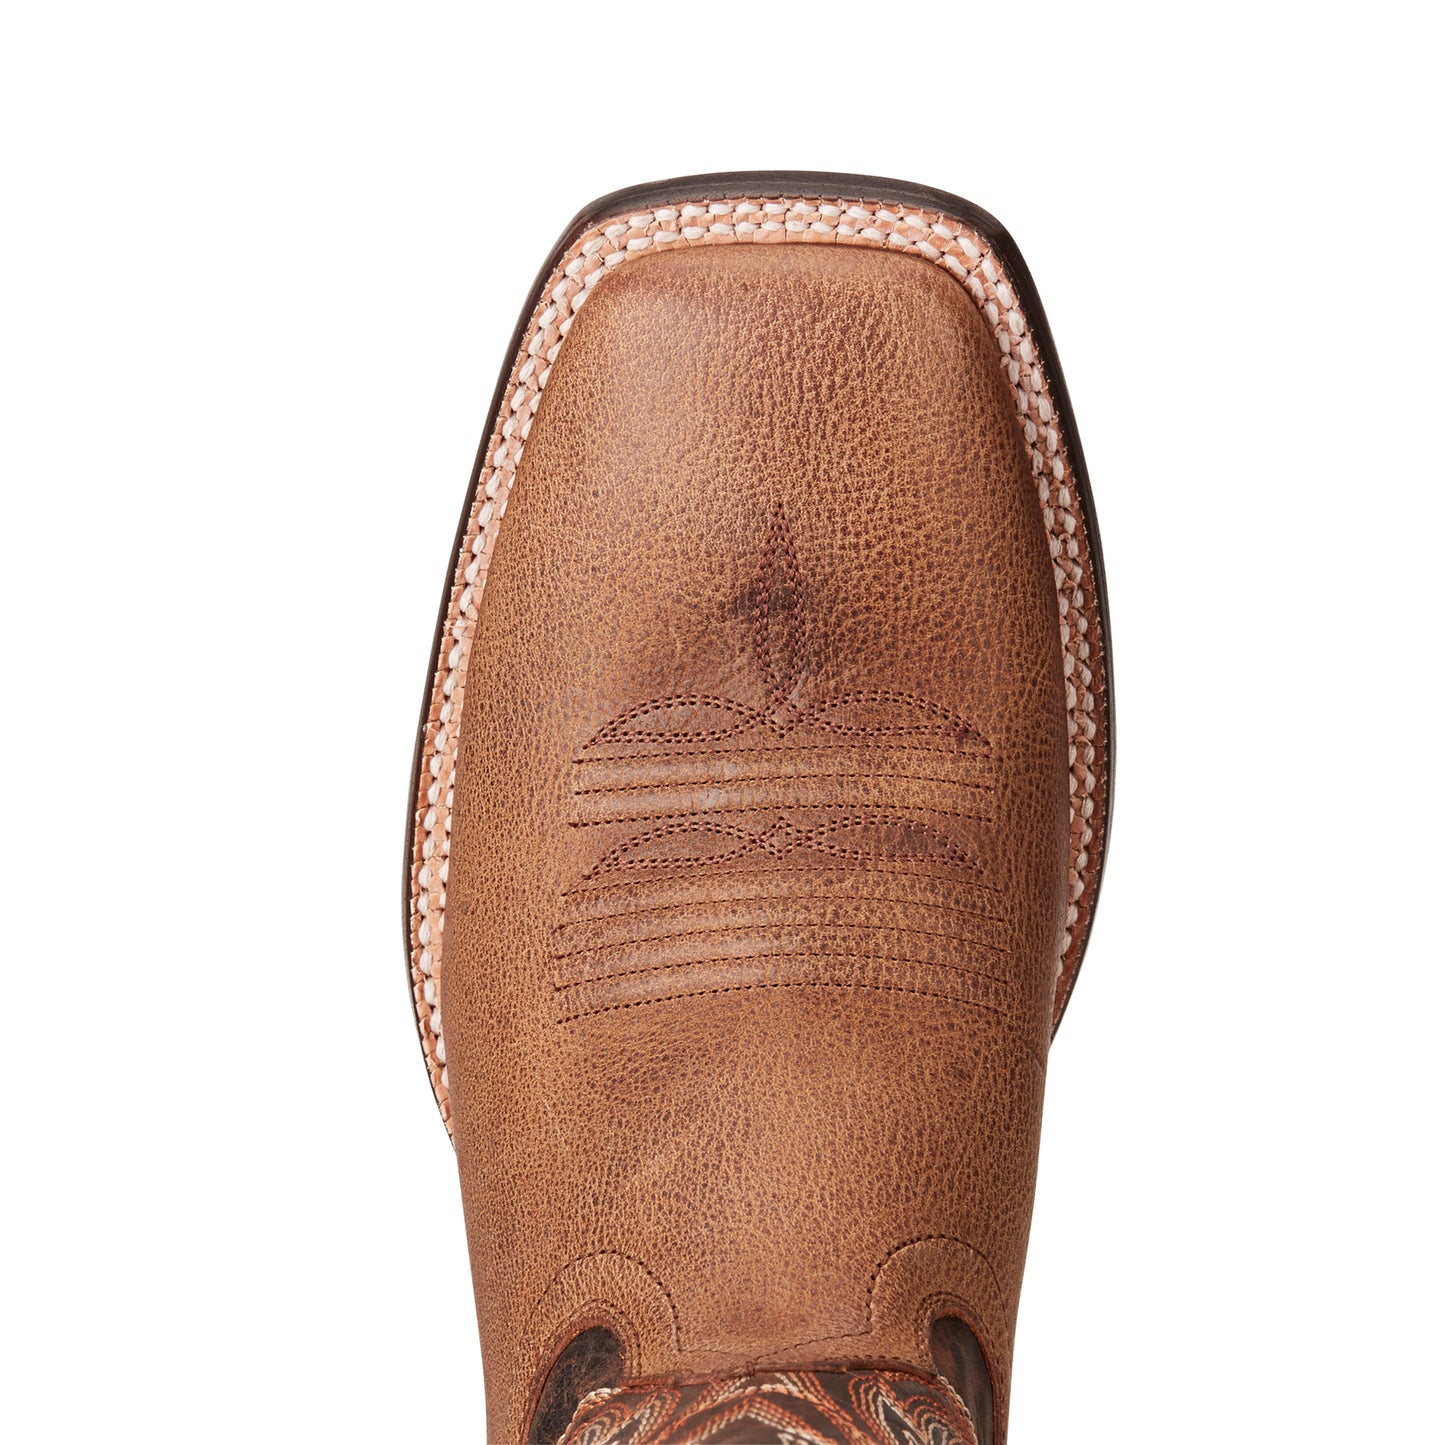 Men's Ariat Boots Ranchero Rebound Khaki #10021643